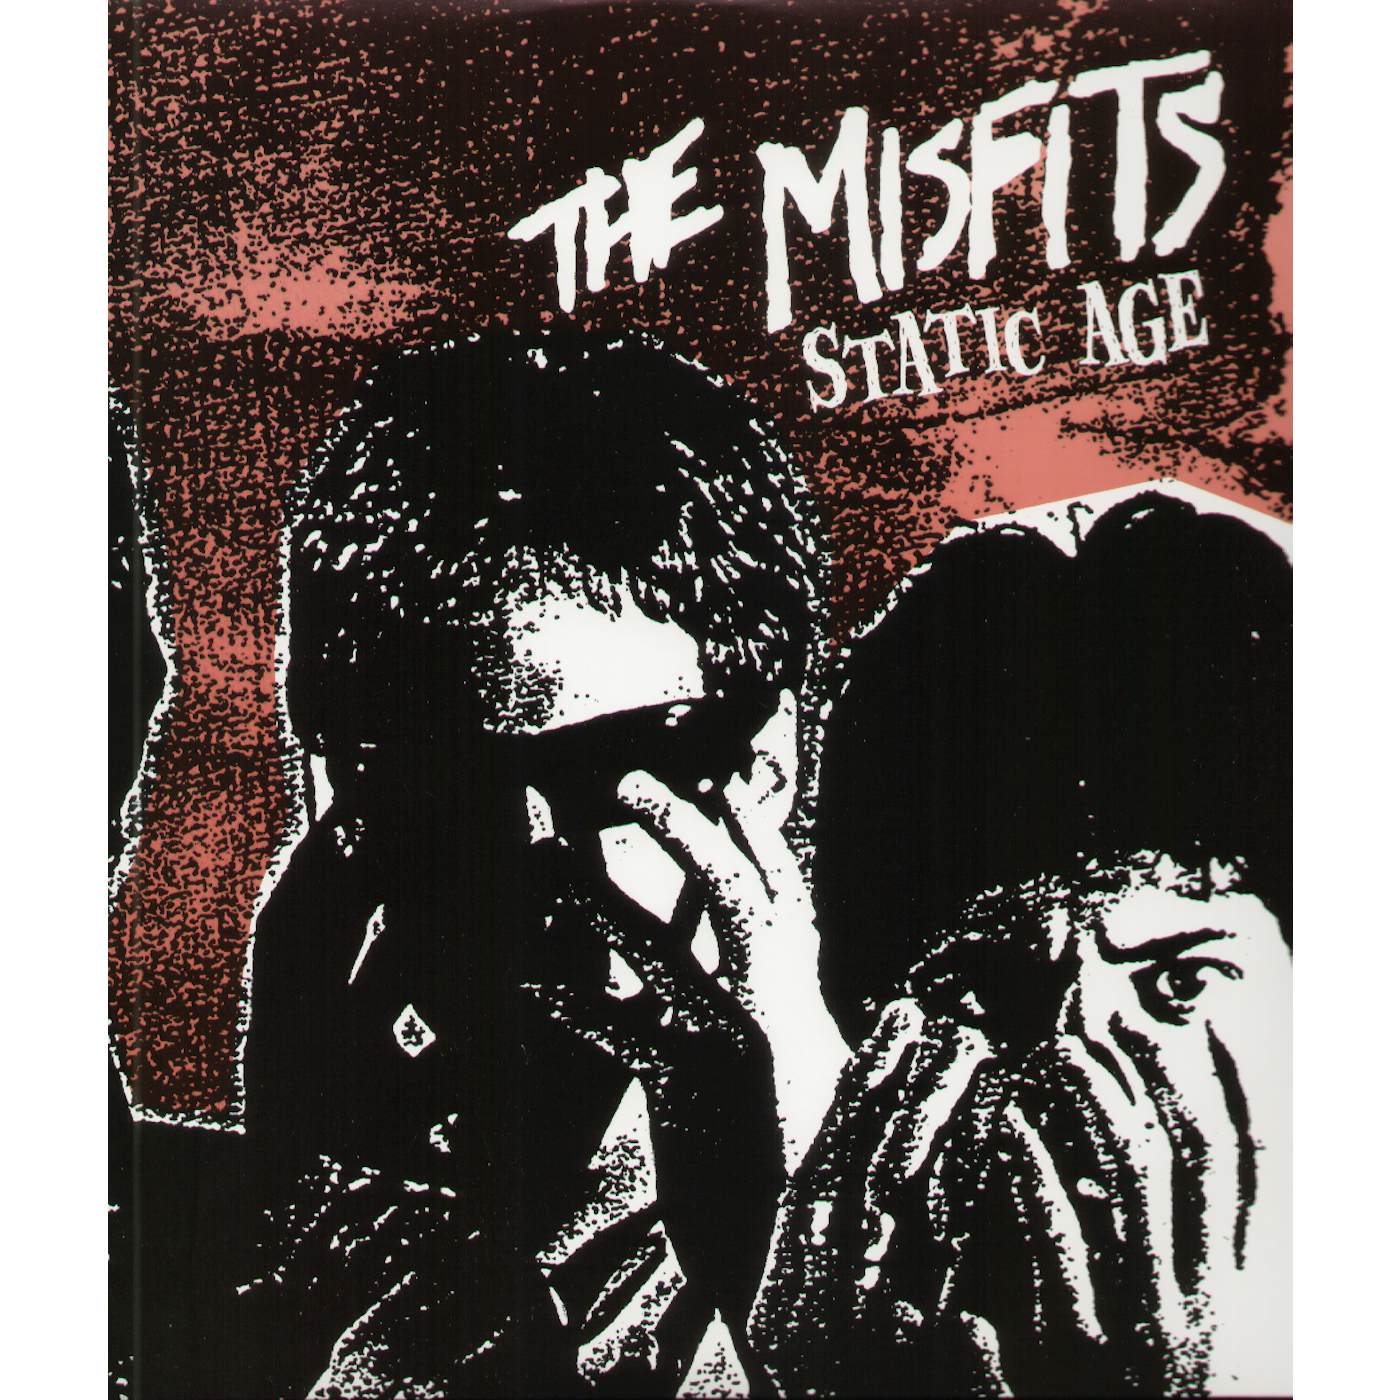 Misfits Static Age Vinyl Record